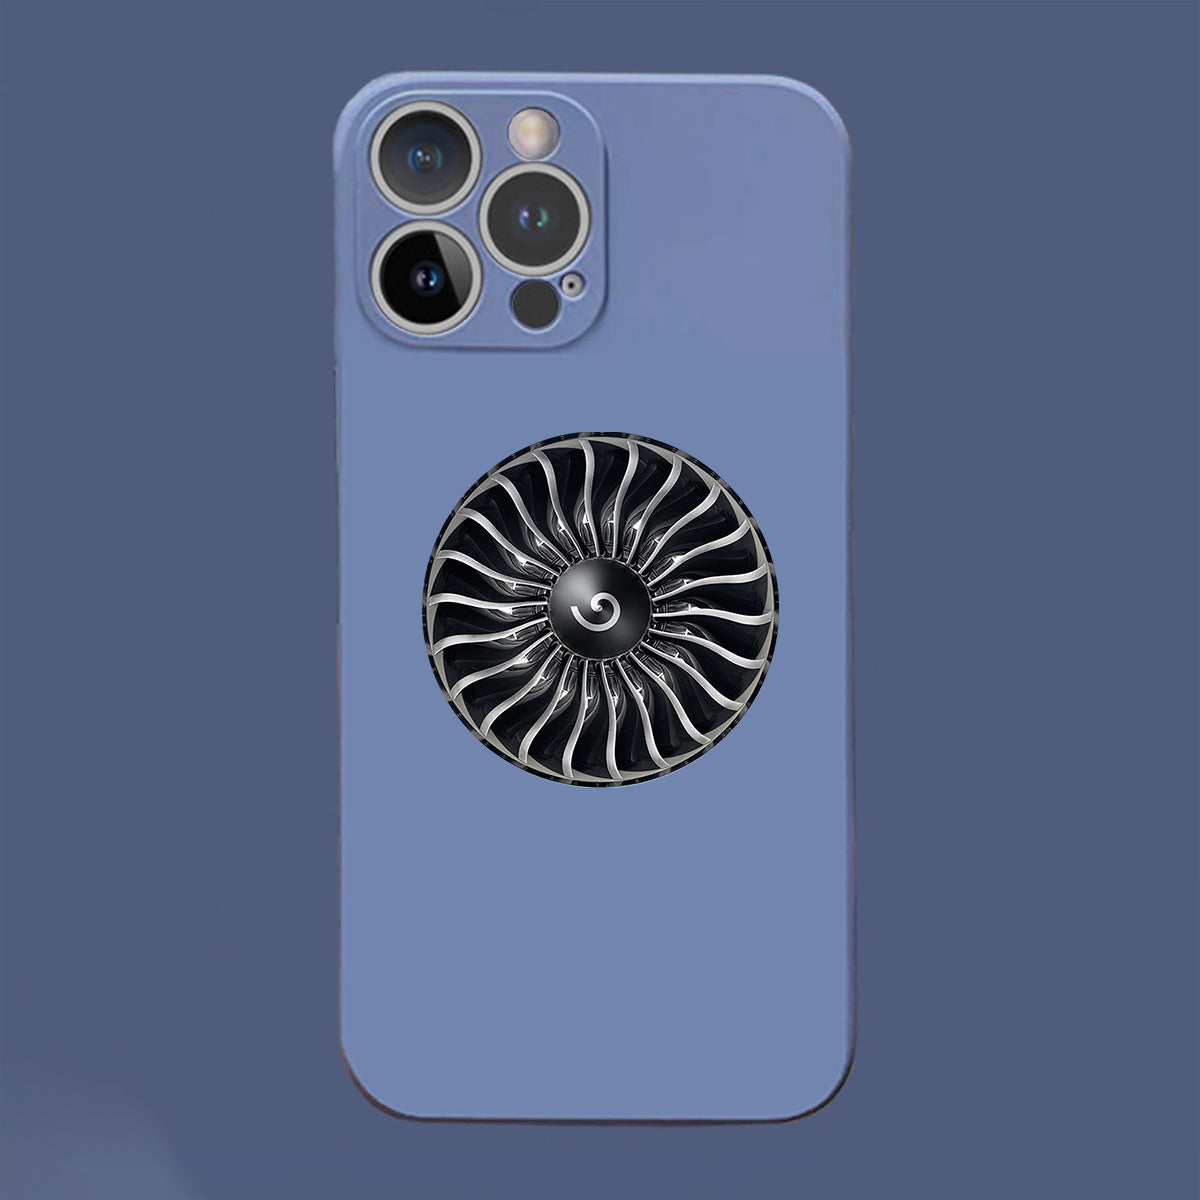 Boeing 777 & GE90 Engine Designed Soft Silicone iPhone Cases